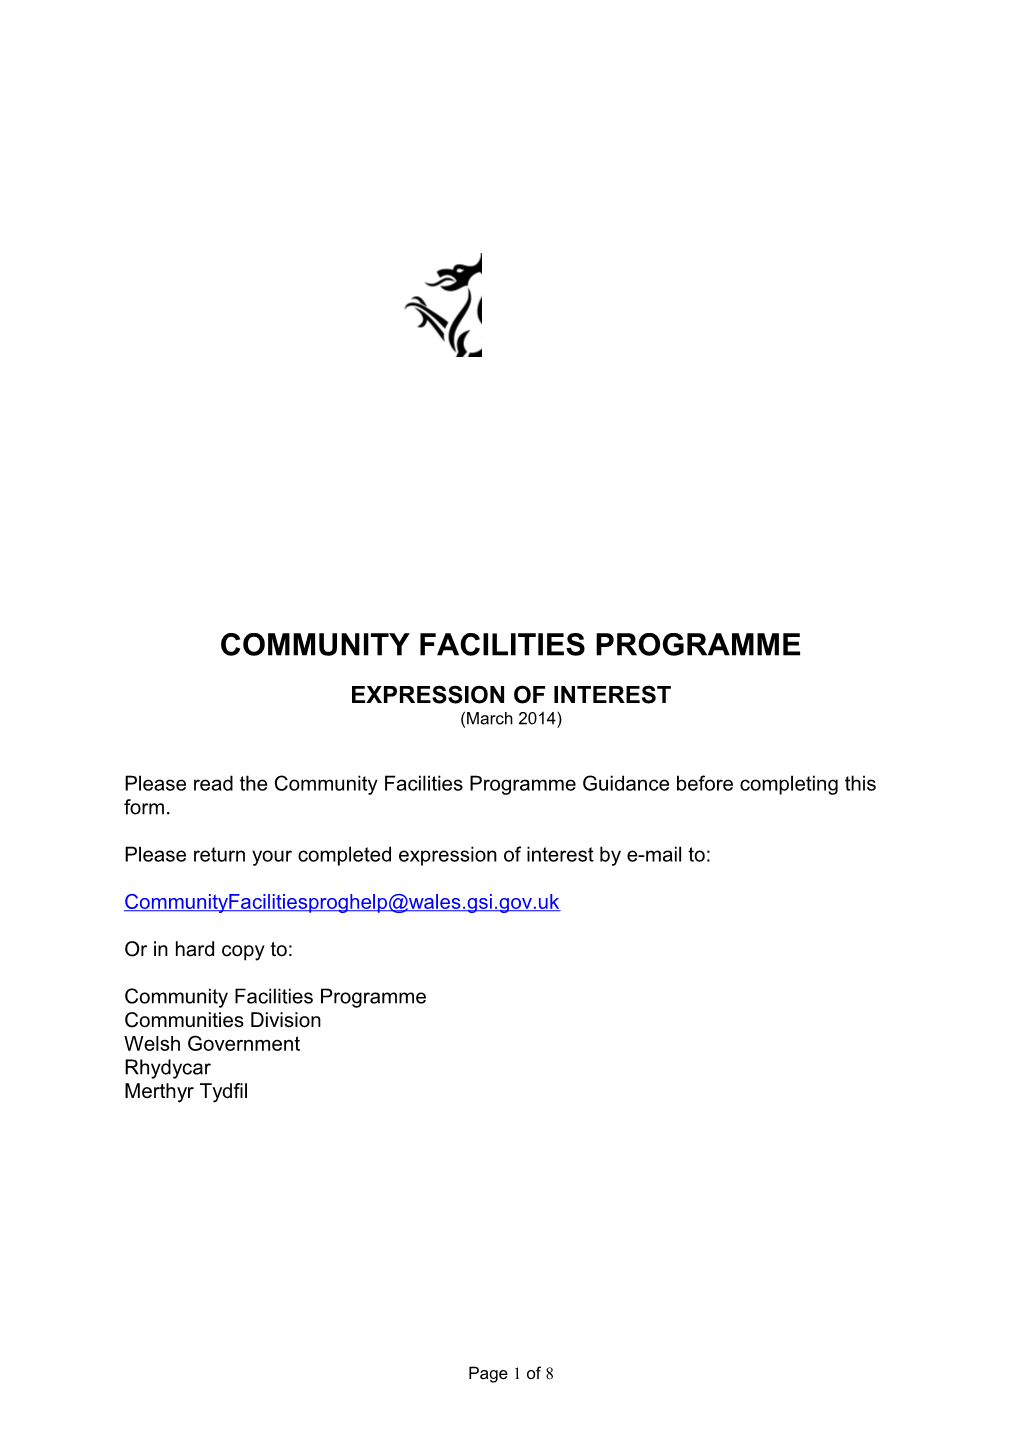 Community Facilities Programme